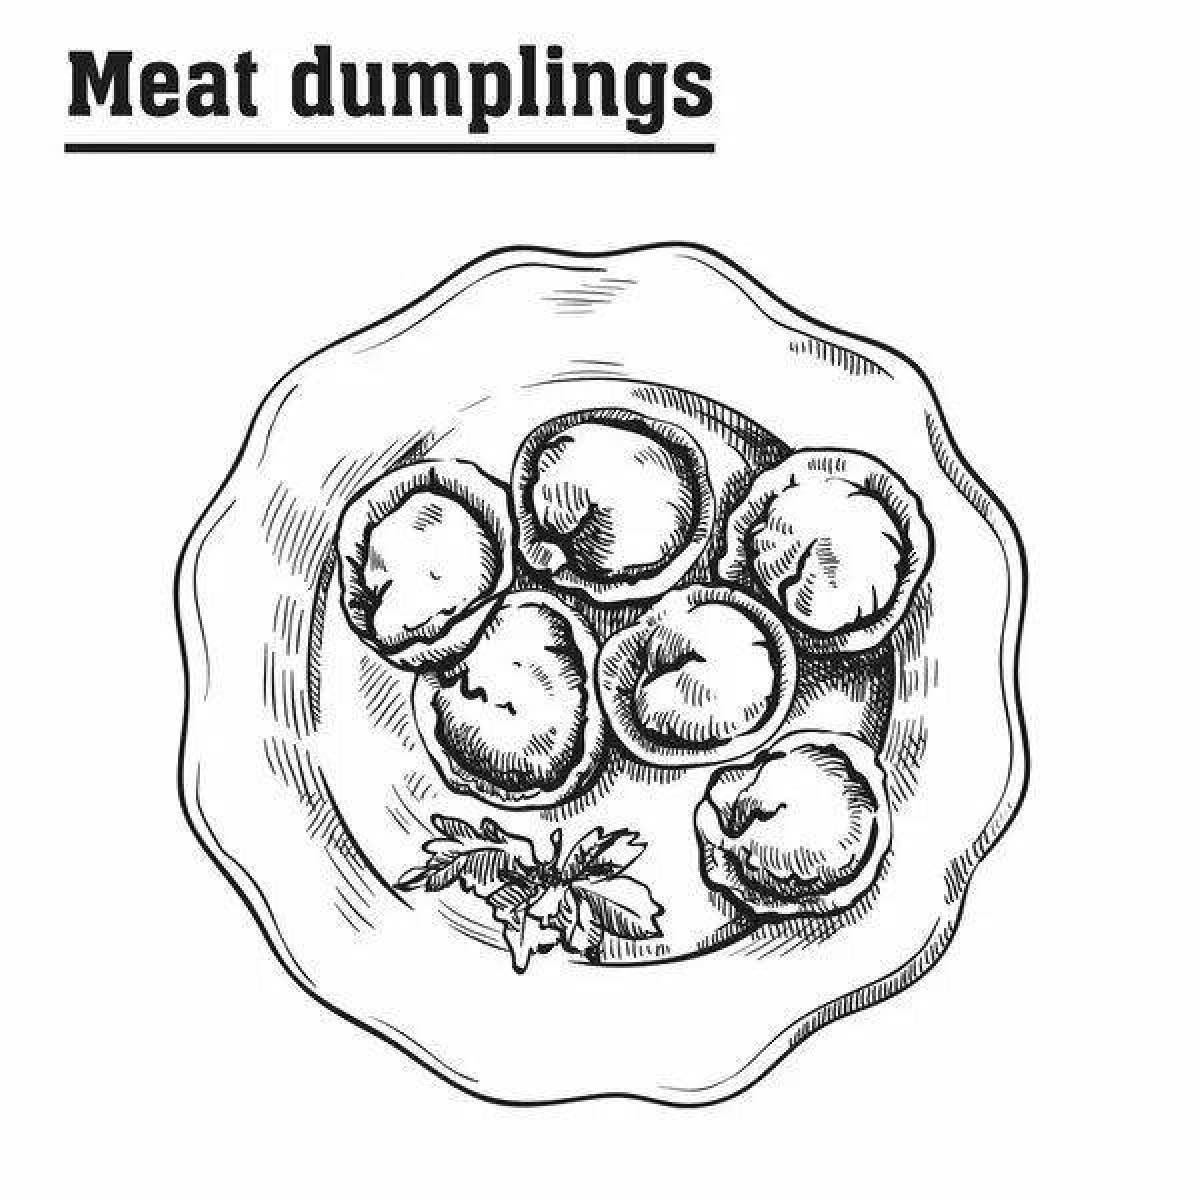 Juicy dumplings in a bowl